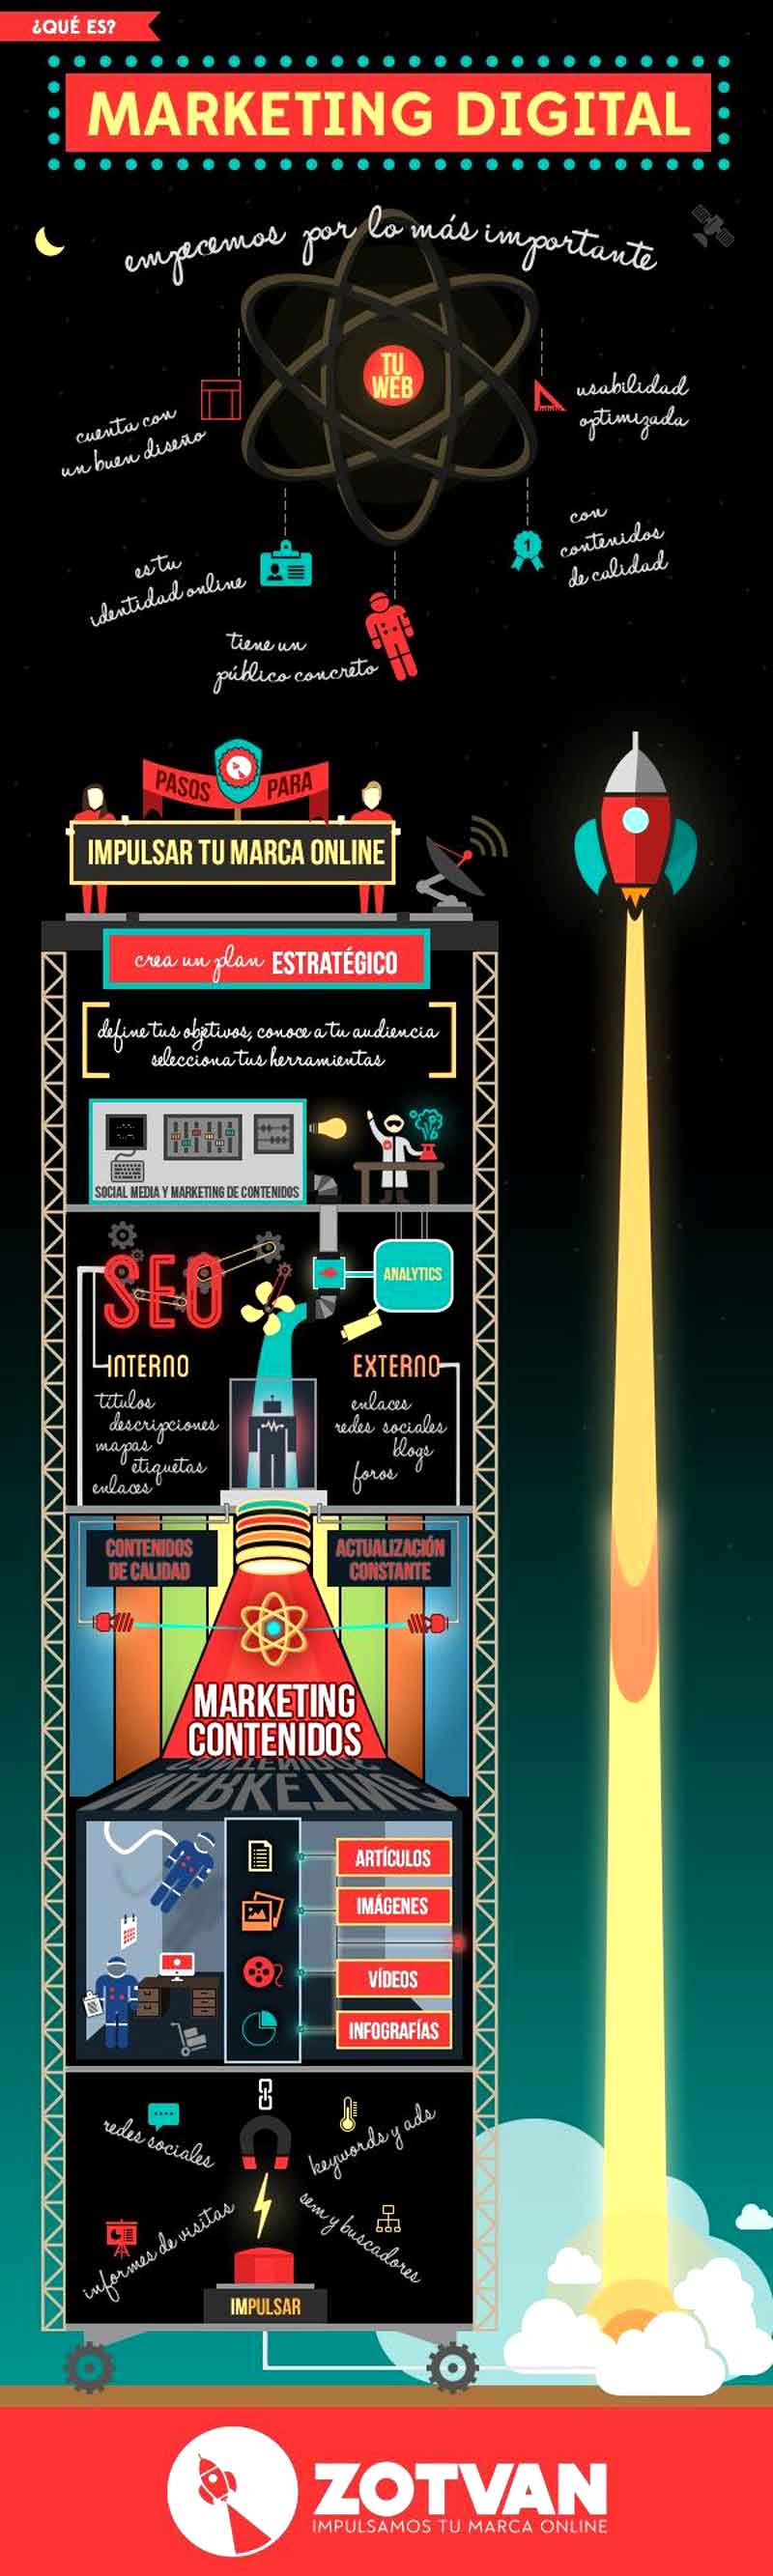 Infografia Que Es Marketing Digital